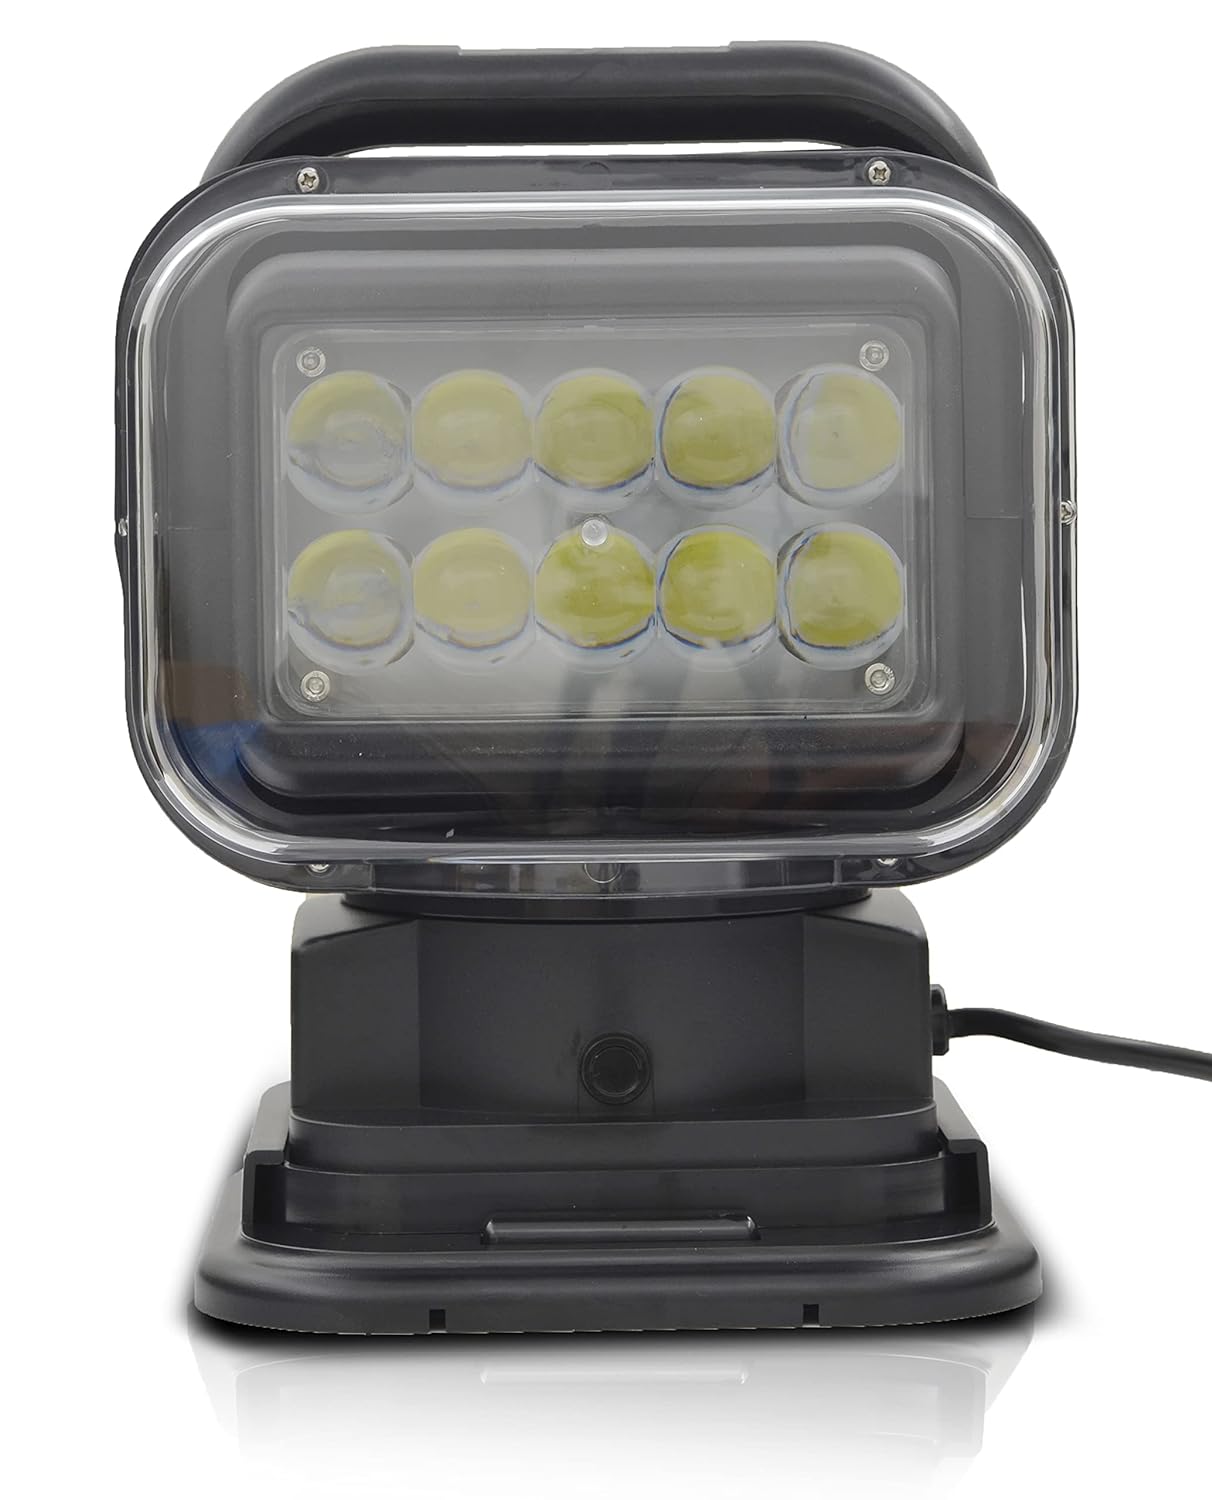 品質保証格安[2台セット] リモコン式 LED サーチライト 50W LEDライト 12V 360度首振 船舶 重機 漁船 サーチライト LED 照明 作業灯 投光器 集魚灯 防水 作業用照明一般